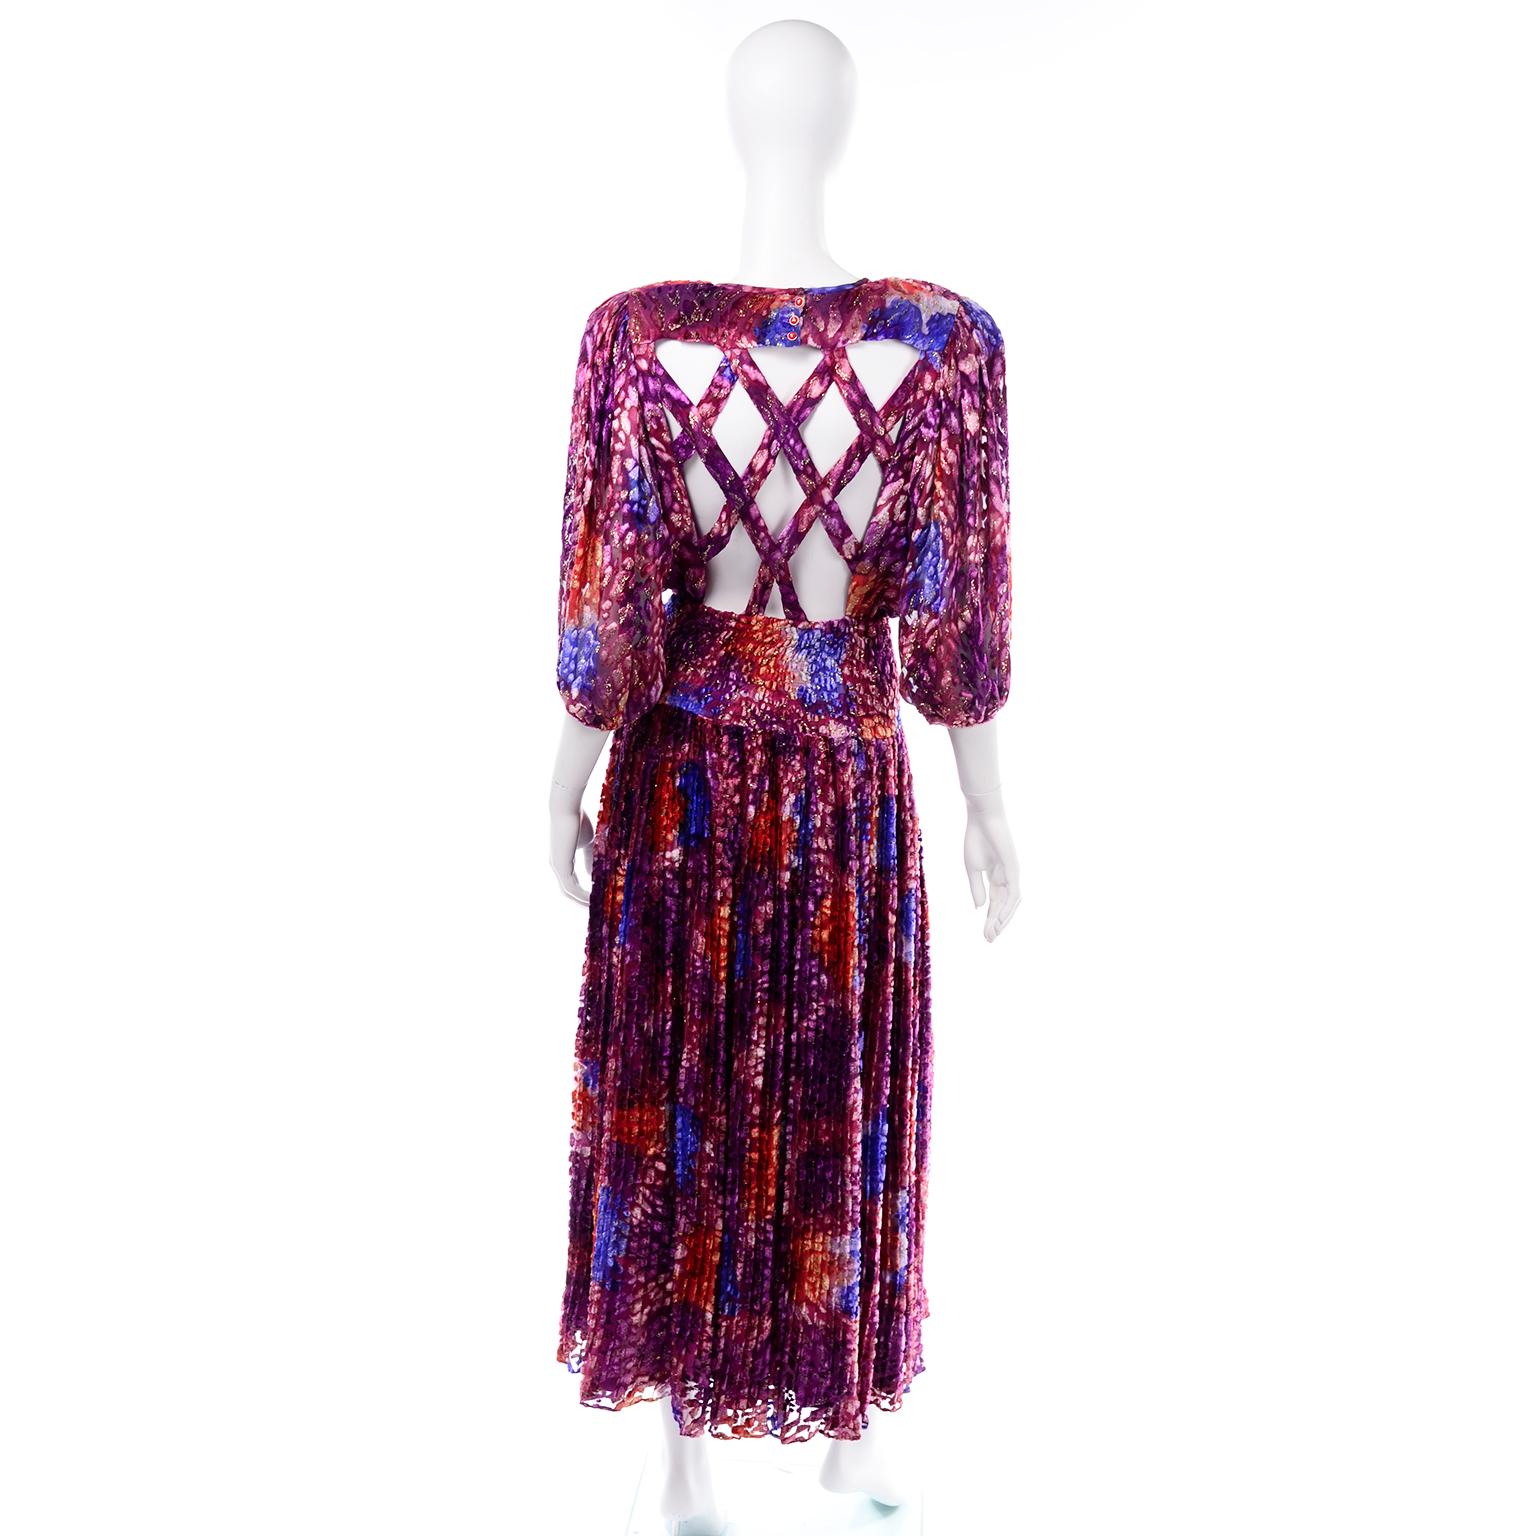 Diane Freis Vintage Purple Pink Velvet Metallic Silk Dress W Open Lattice Work 1